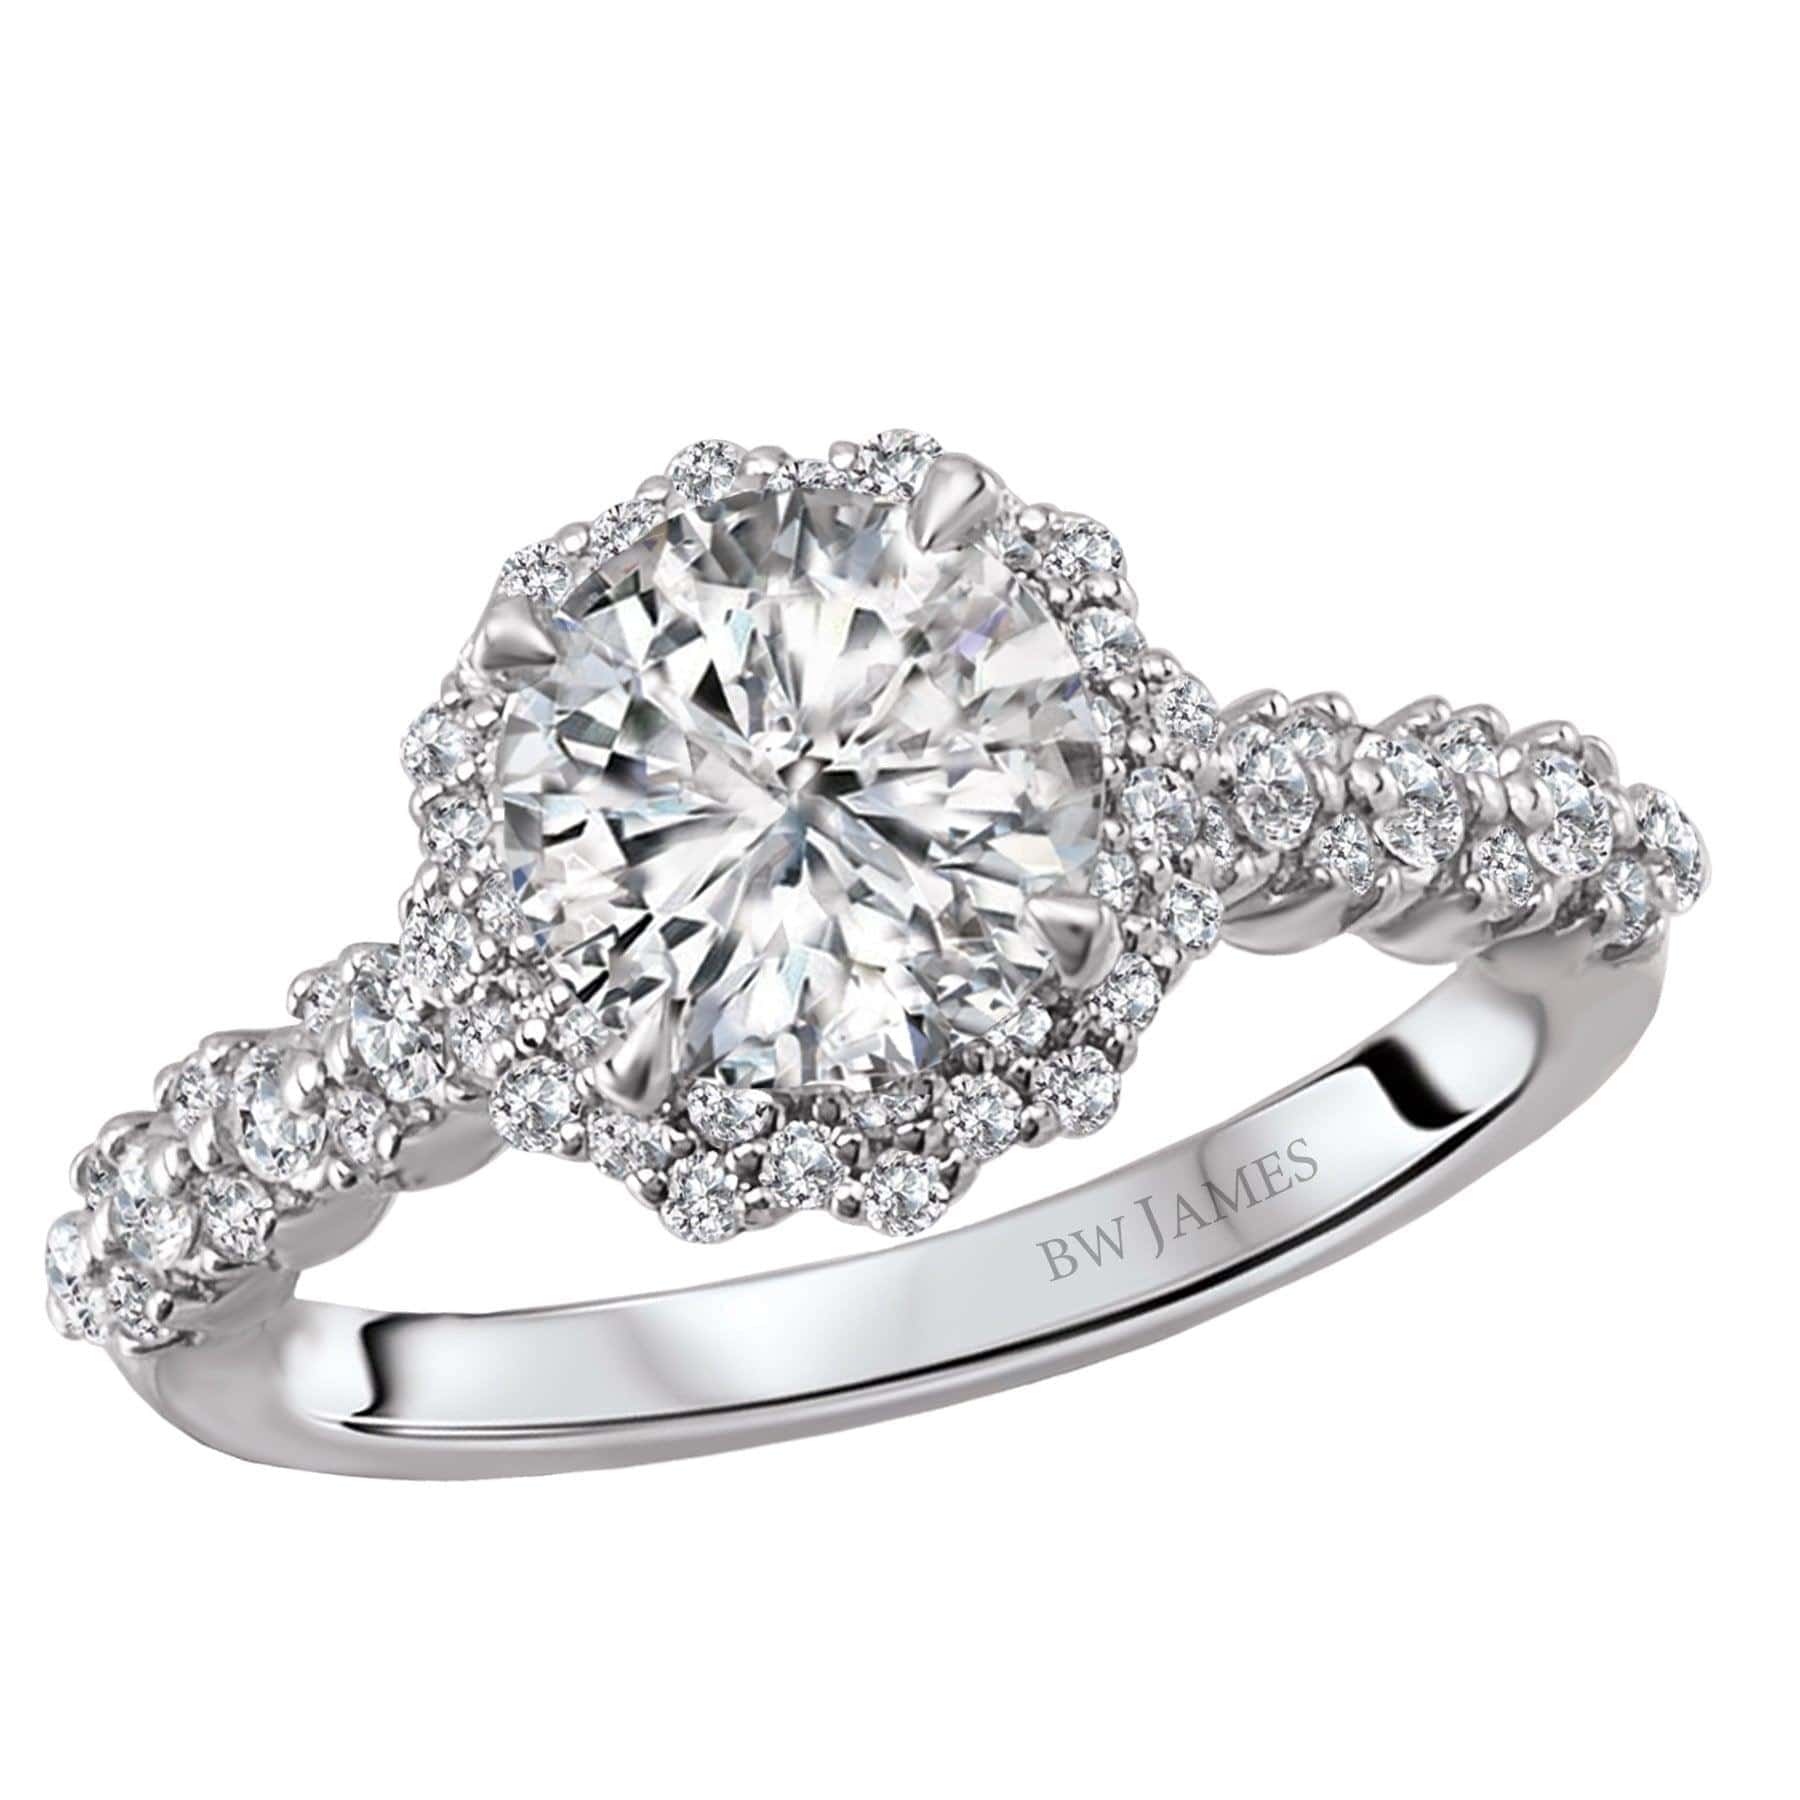 BW JAMES Engagement Rings White Gold " The Vegas" Halo Semi-Mount Diamond Ring